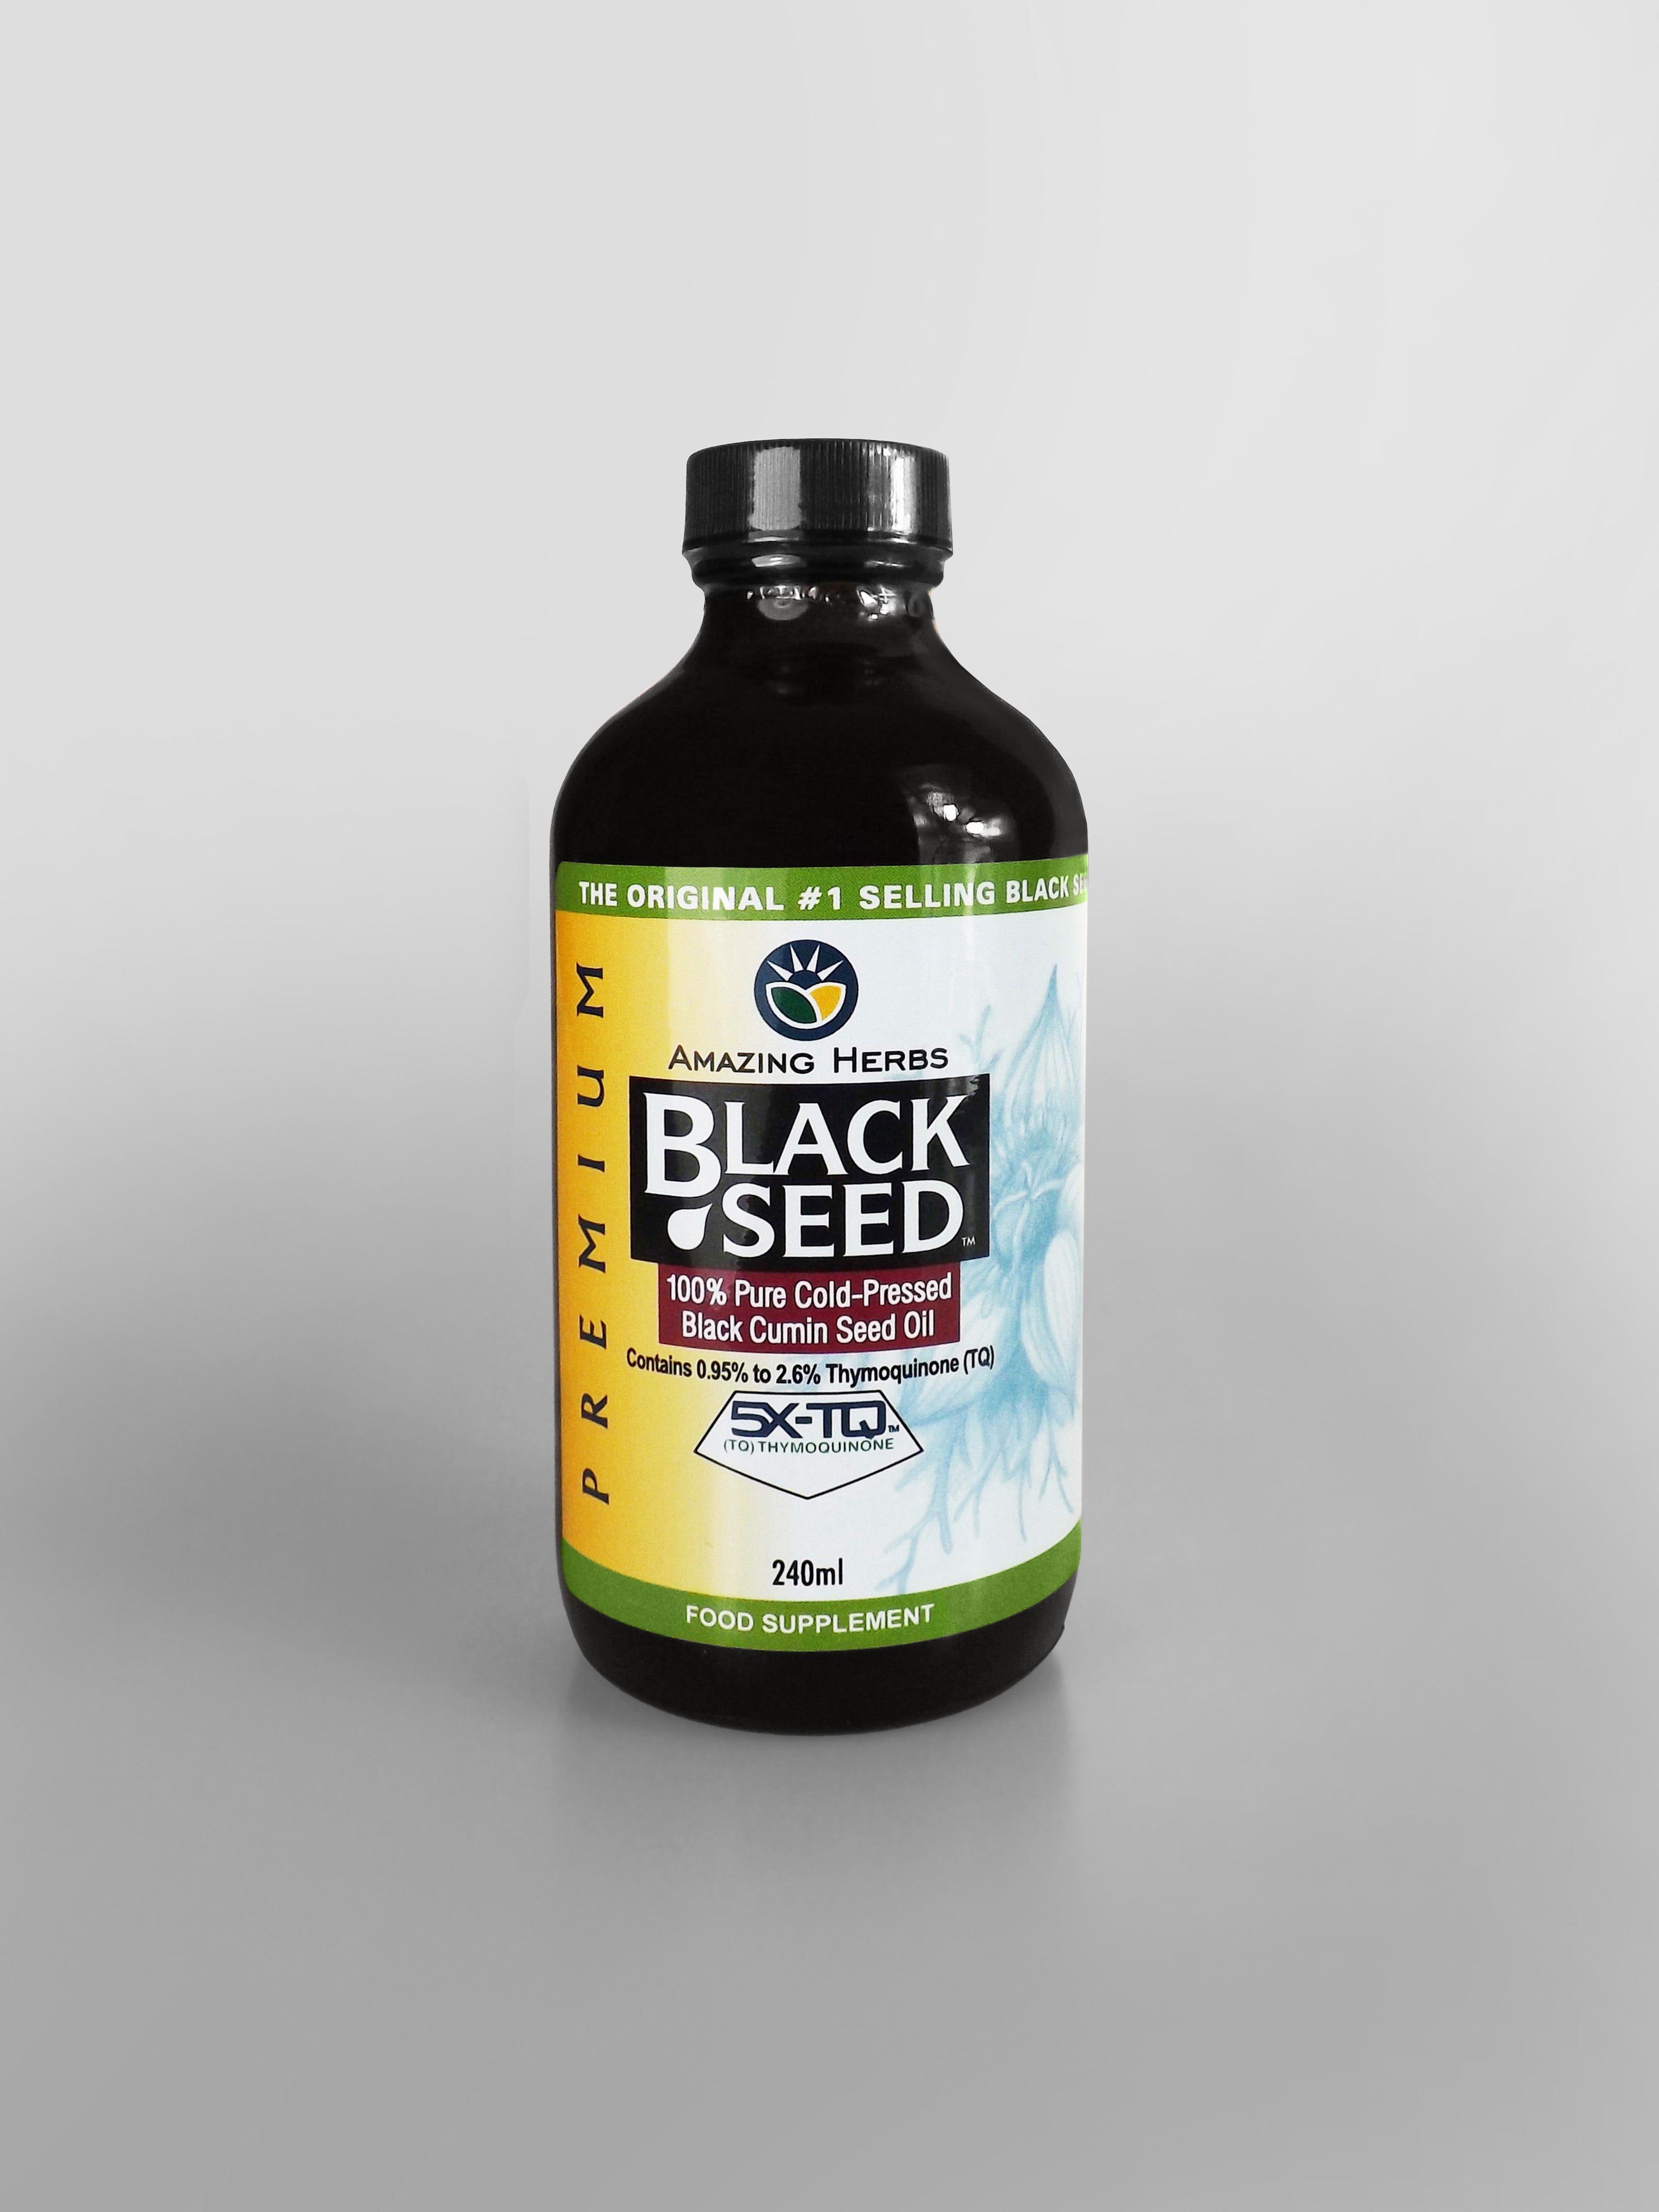 Amazing Herbs Premium Black Seed 100% Pure Cold-Pressed Black Cumin Seed Oil